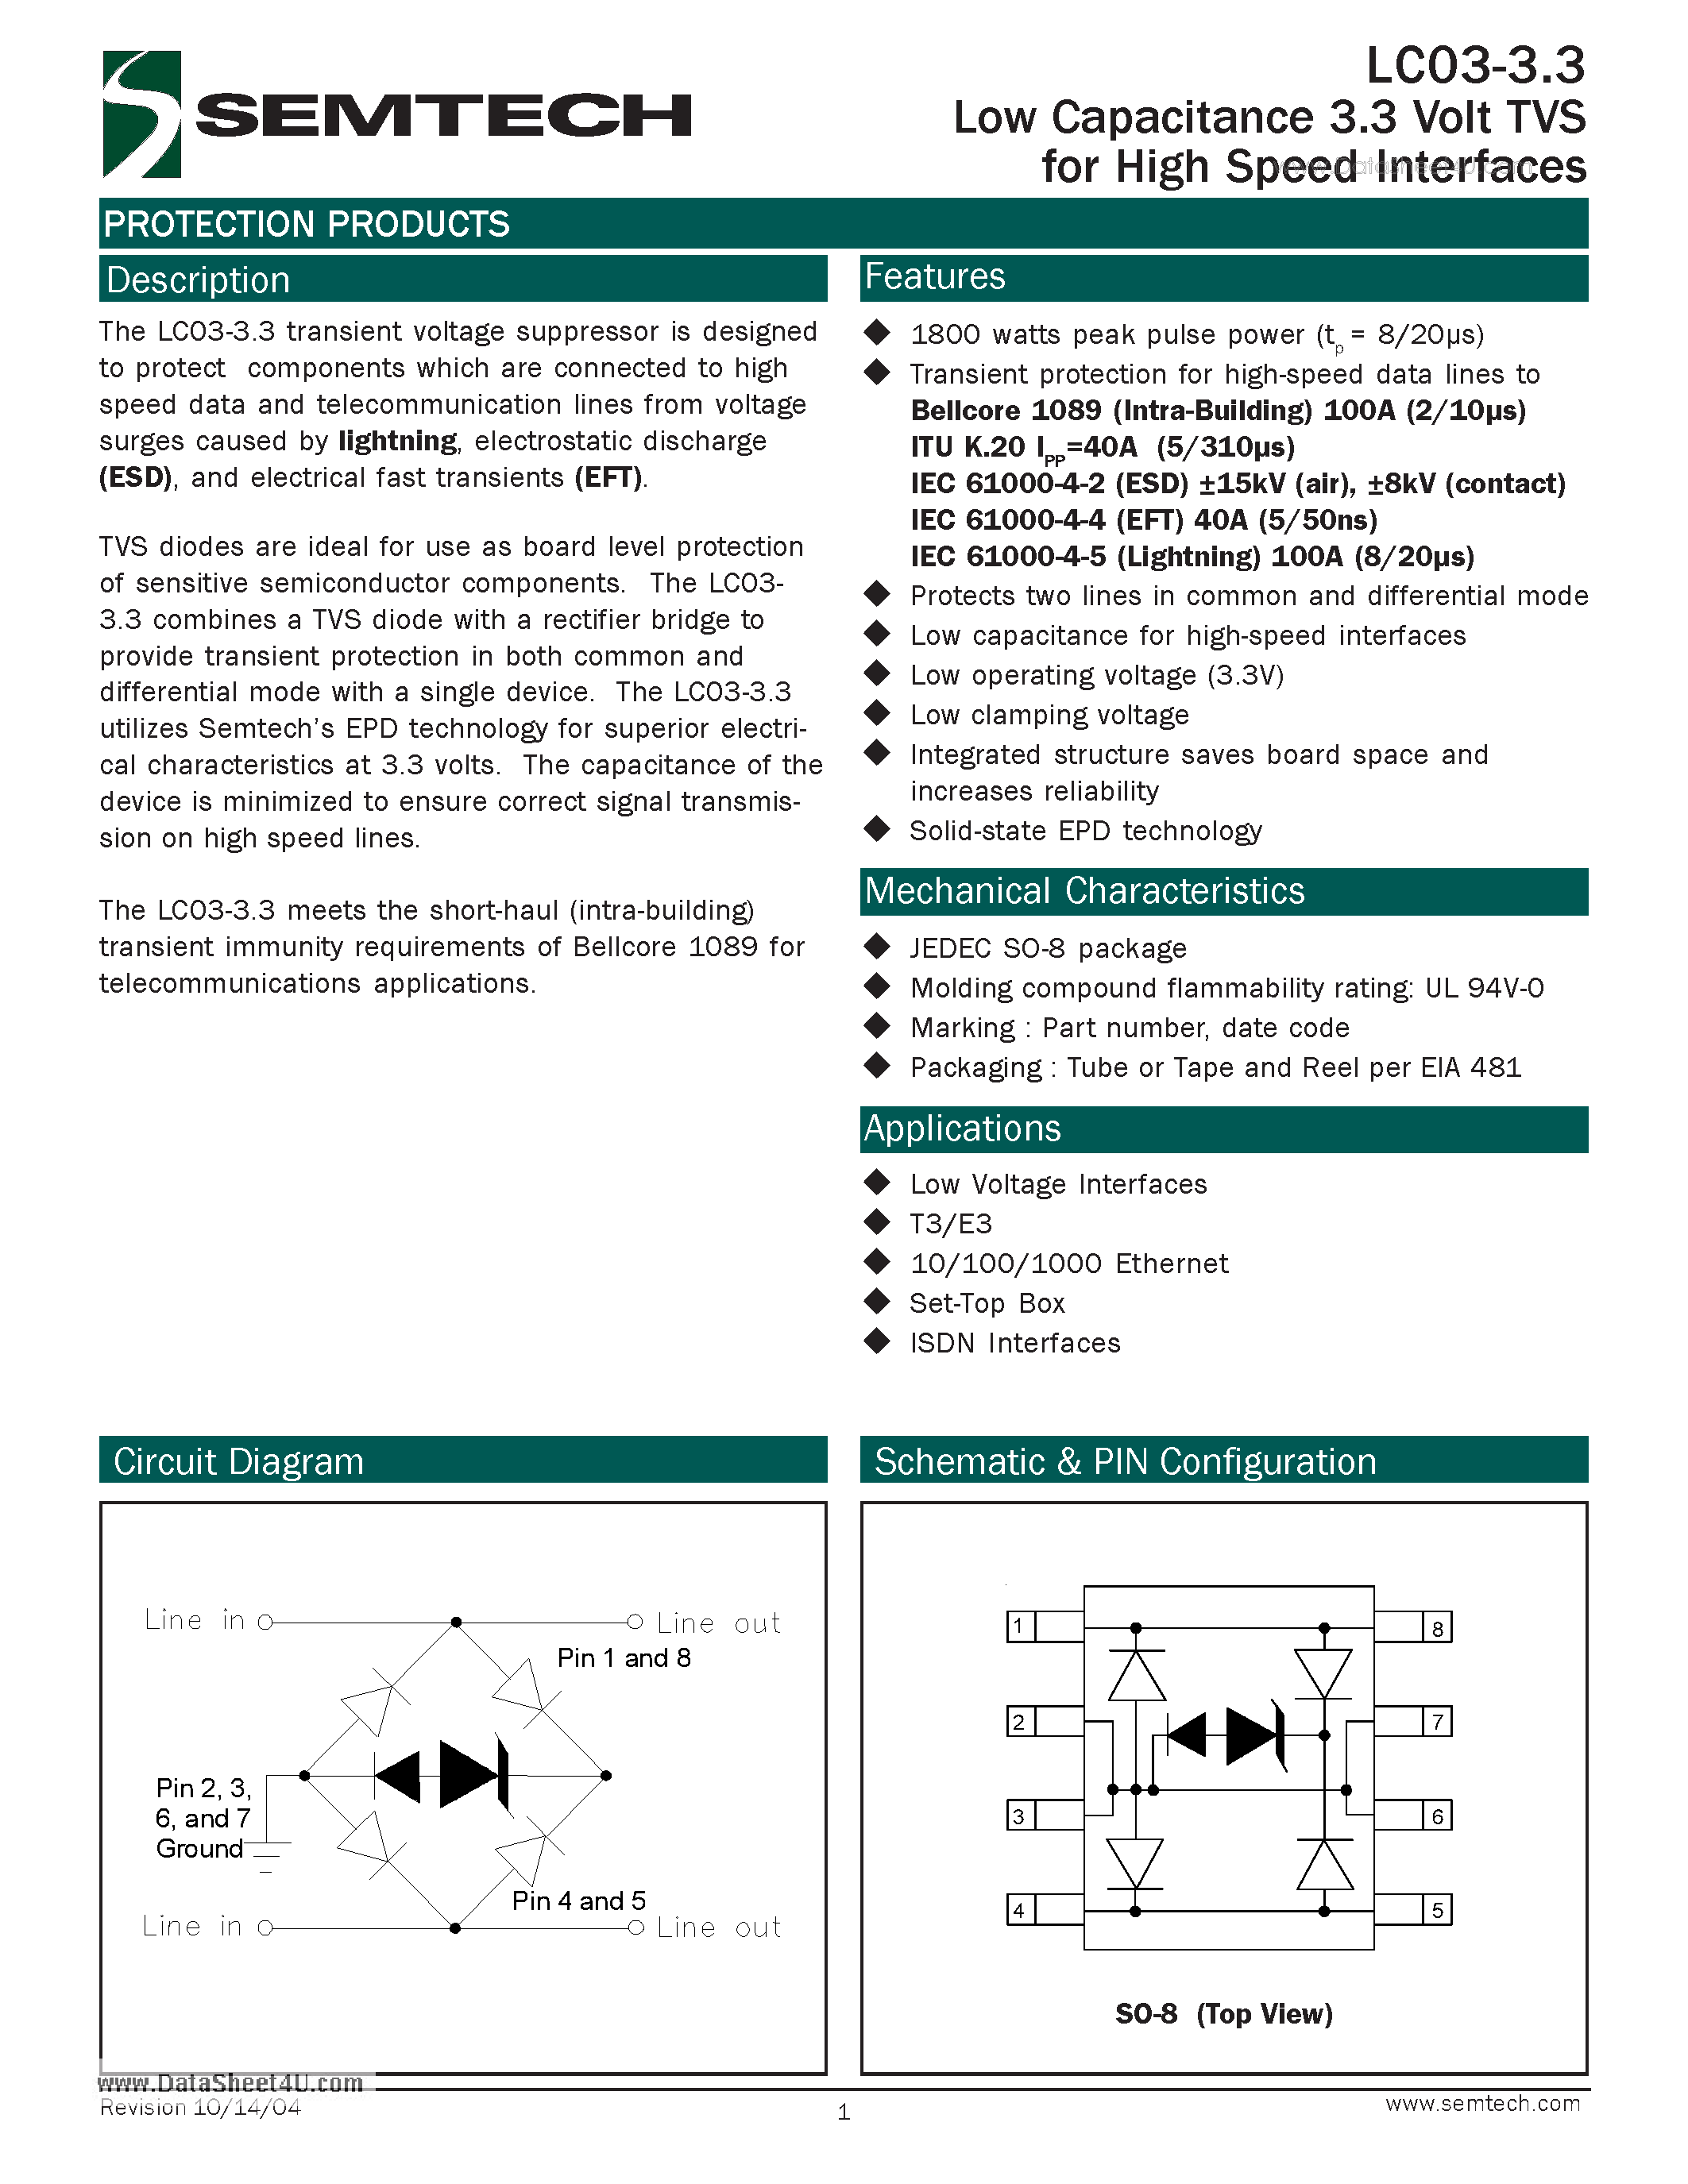 Datasheet LC03-3.3 - Low Capacitance 3.3 Volt TVS page 1